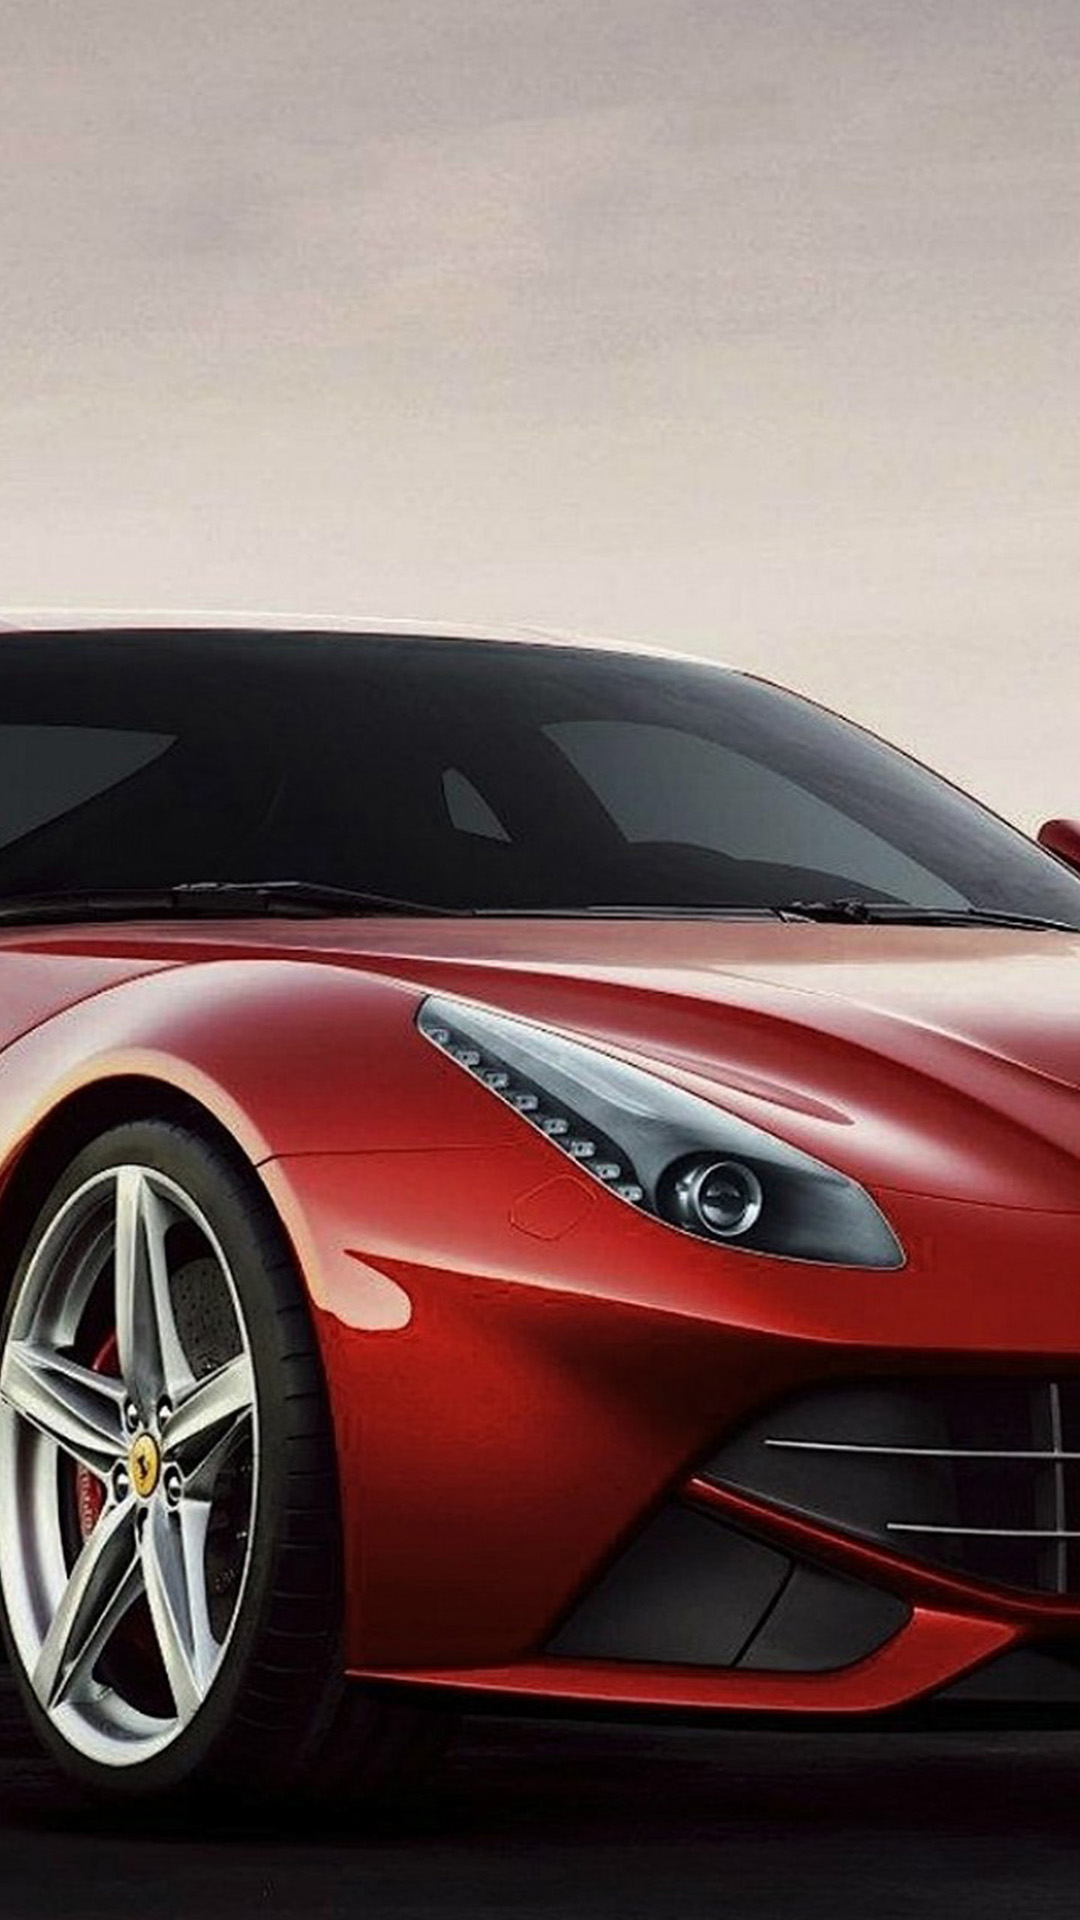 Download Download Ferrari Wallpaper 1080p #vsStz hdxwallpaperz.com